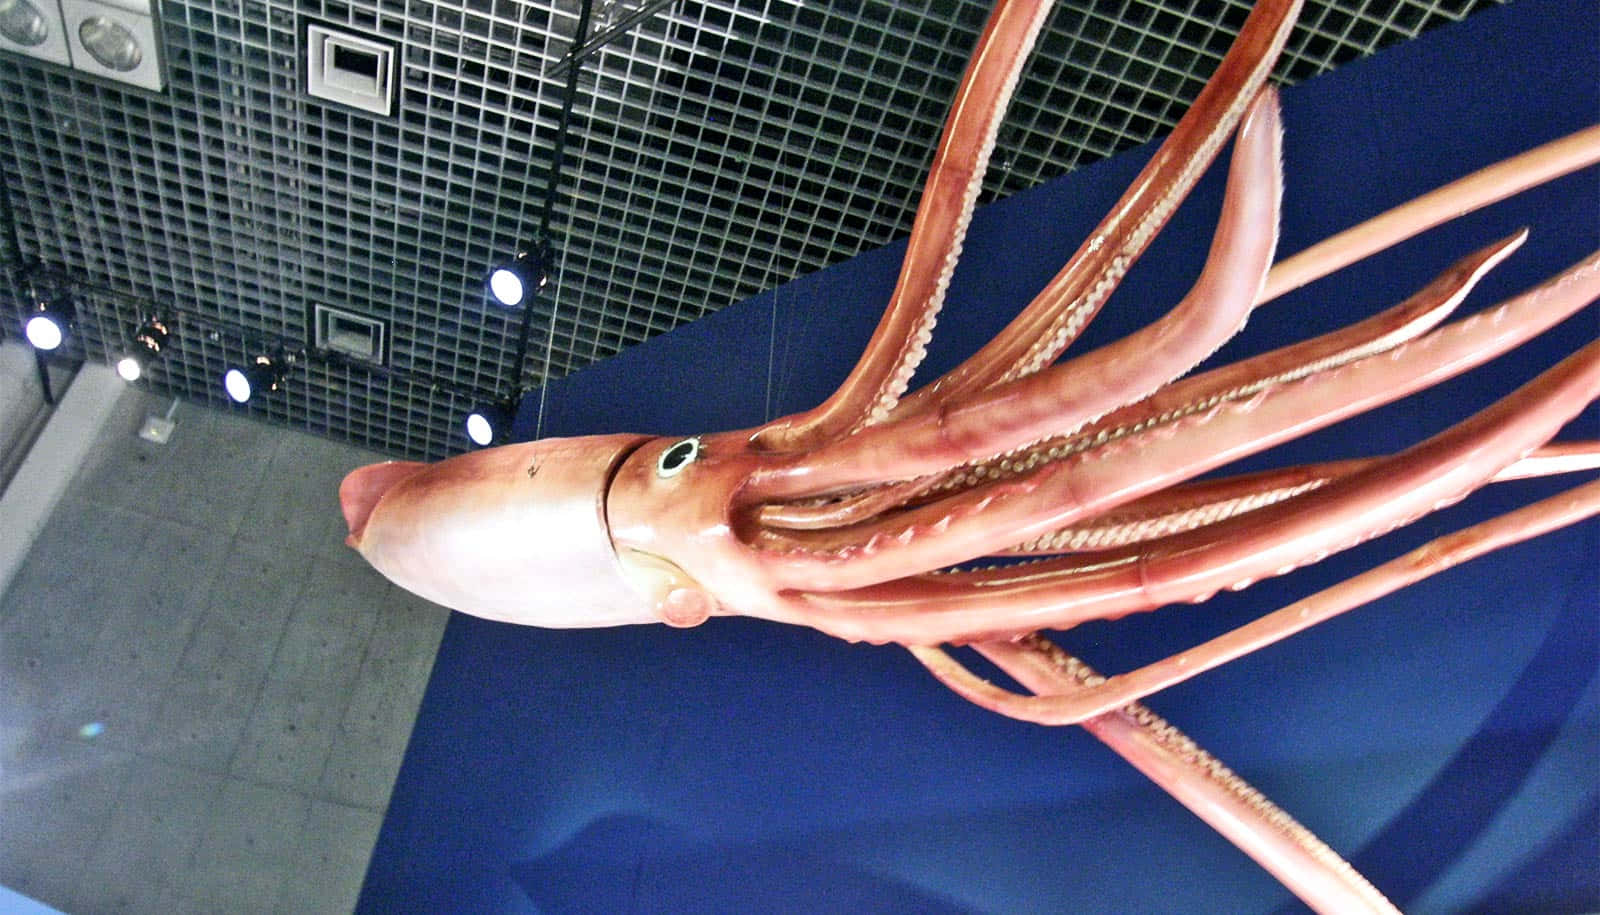 “A beautiful squid caught off the coast of Florida, USA.”